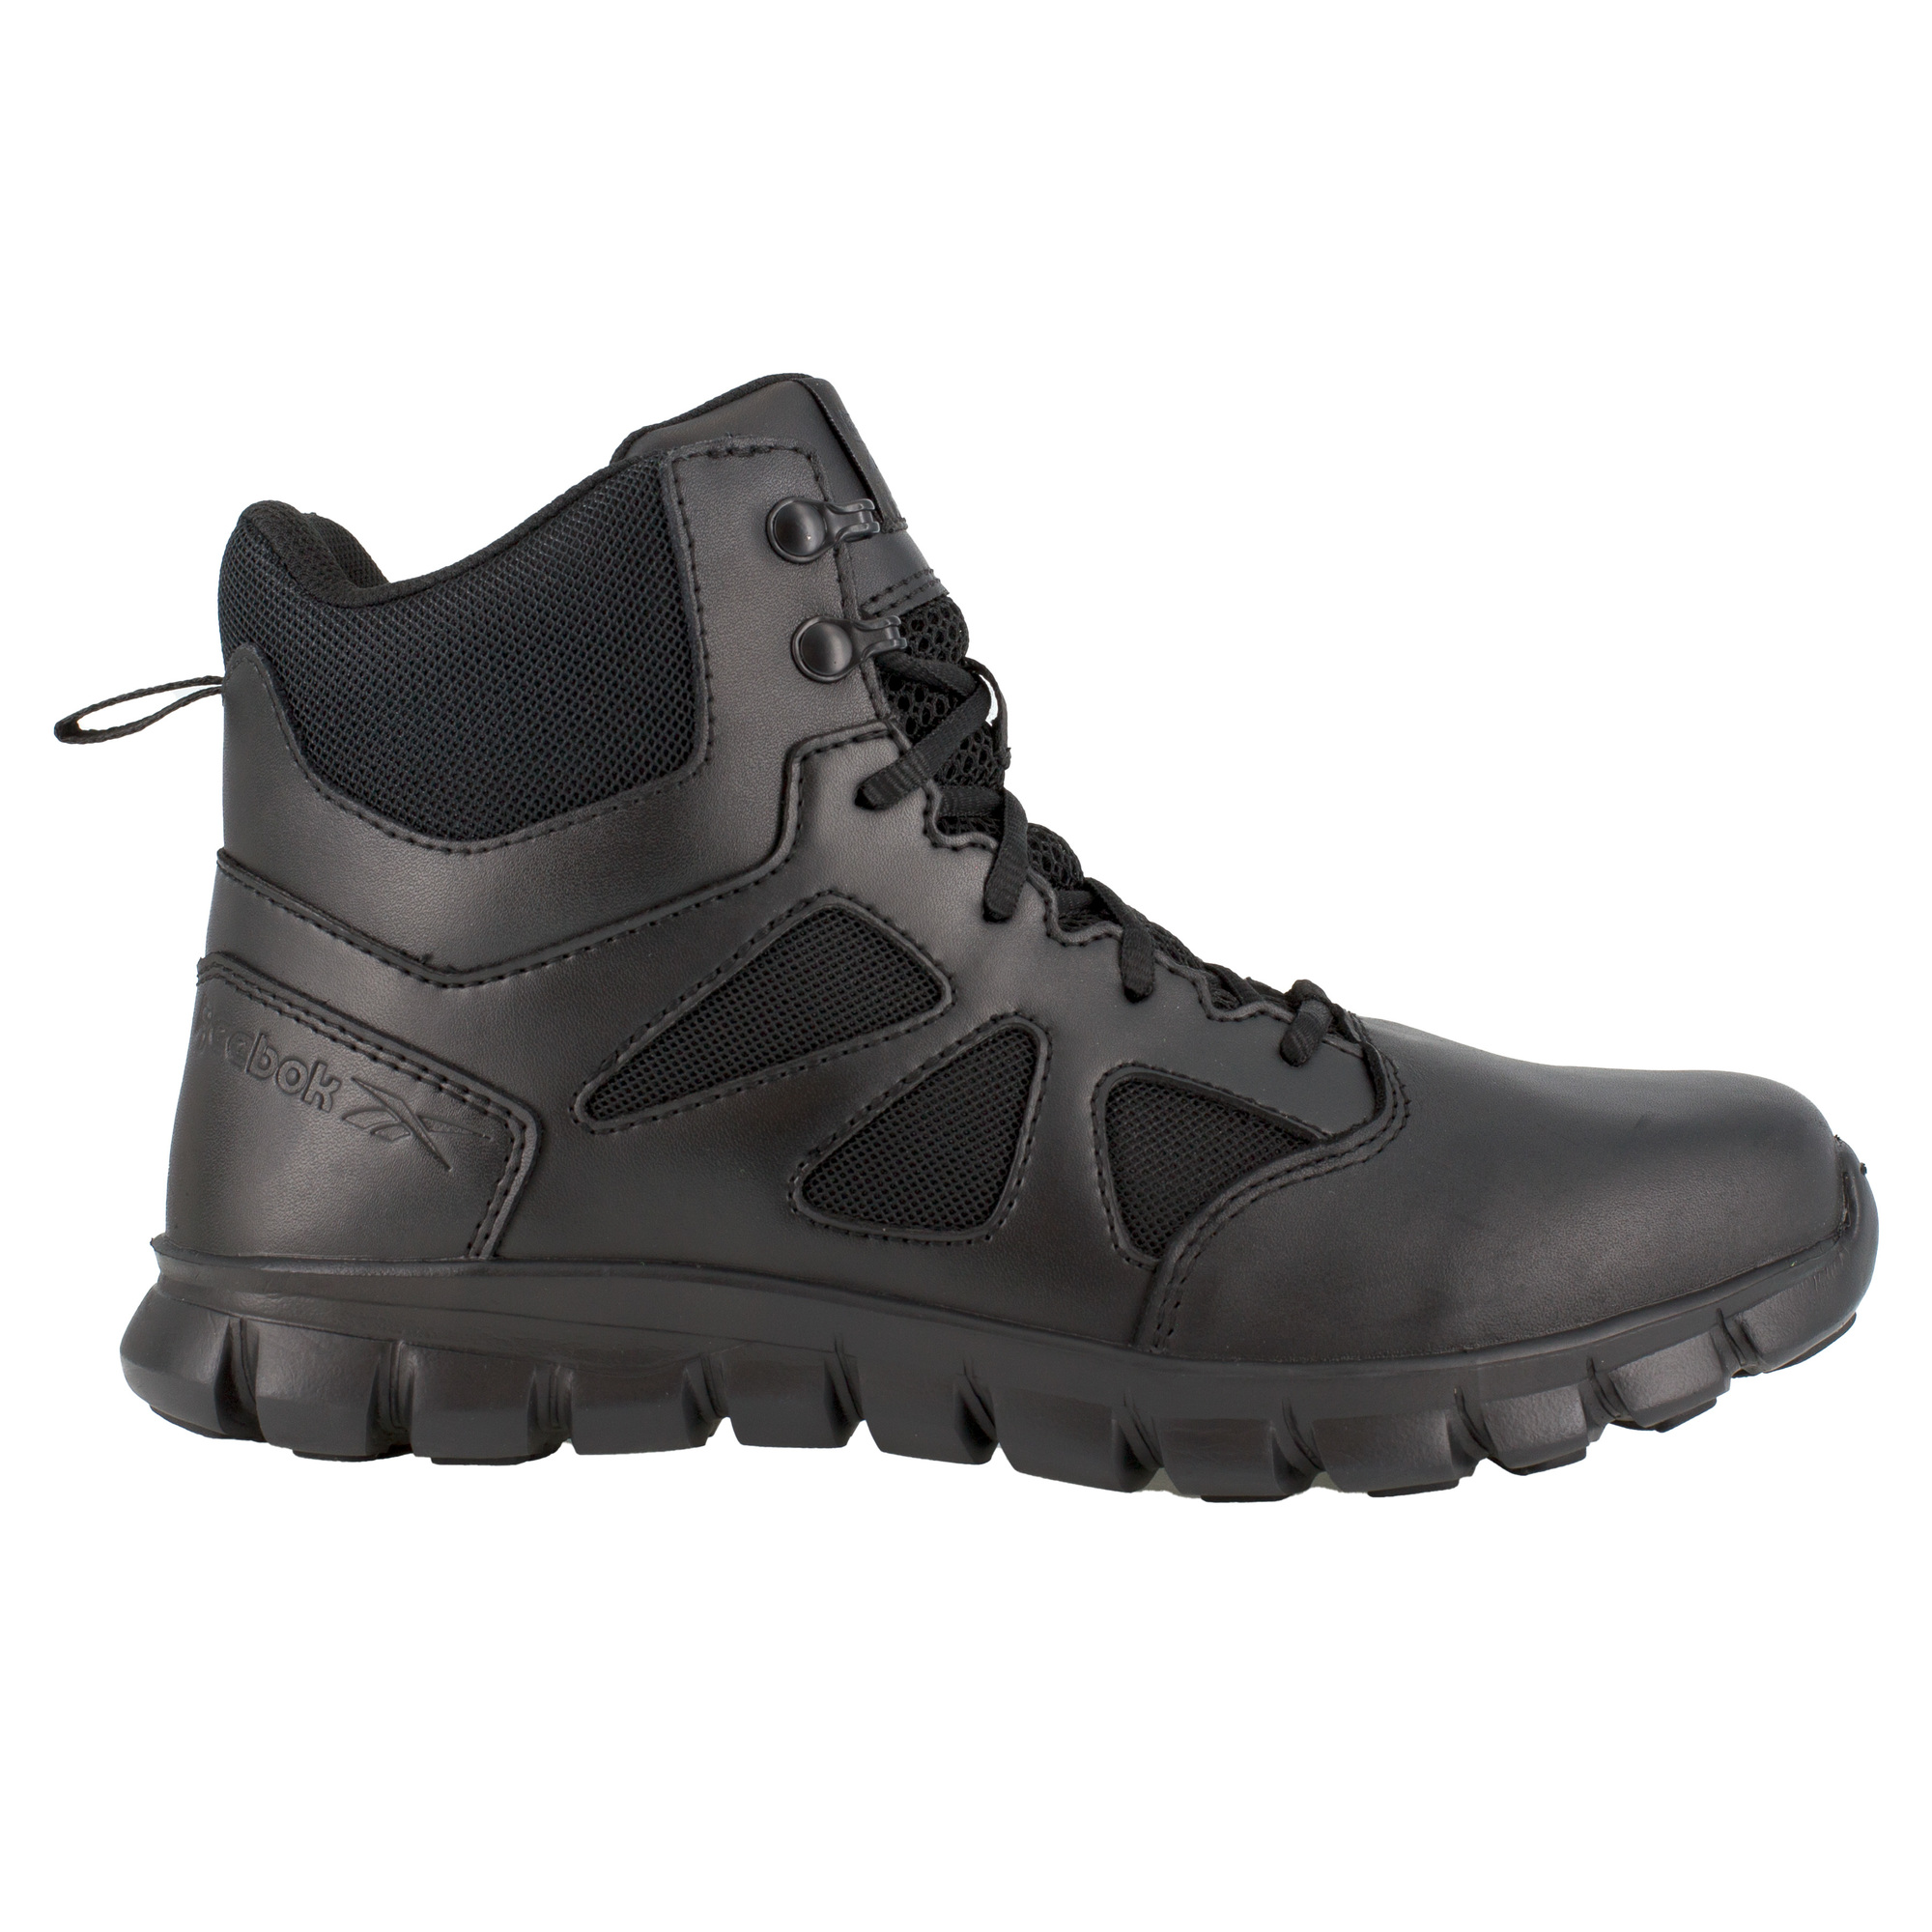 Reebok, 6Inch Tactical Boot w/Side Zipper, Size 9 1/2, Width Medium, Color Black, Model RB086